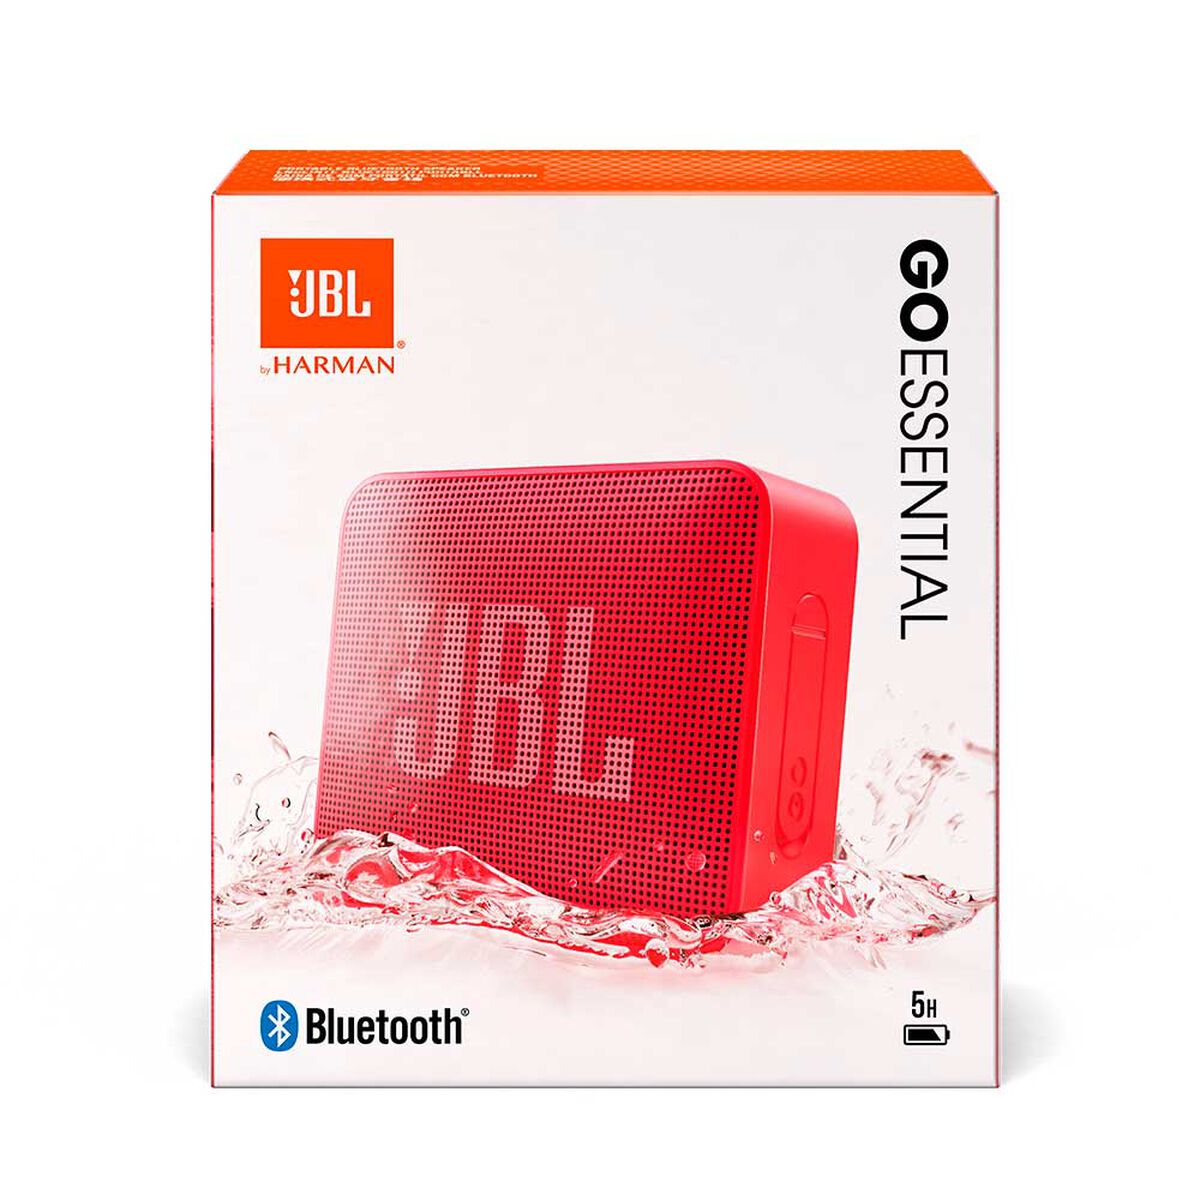 Parlante Bluetooth JBL Go Essential Rojo